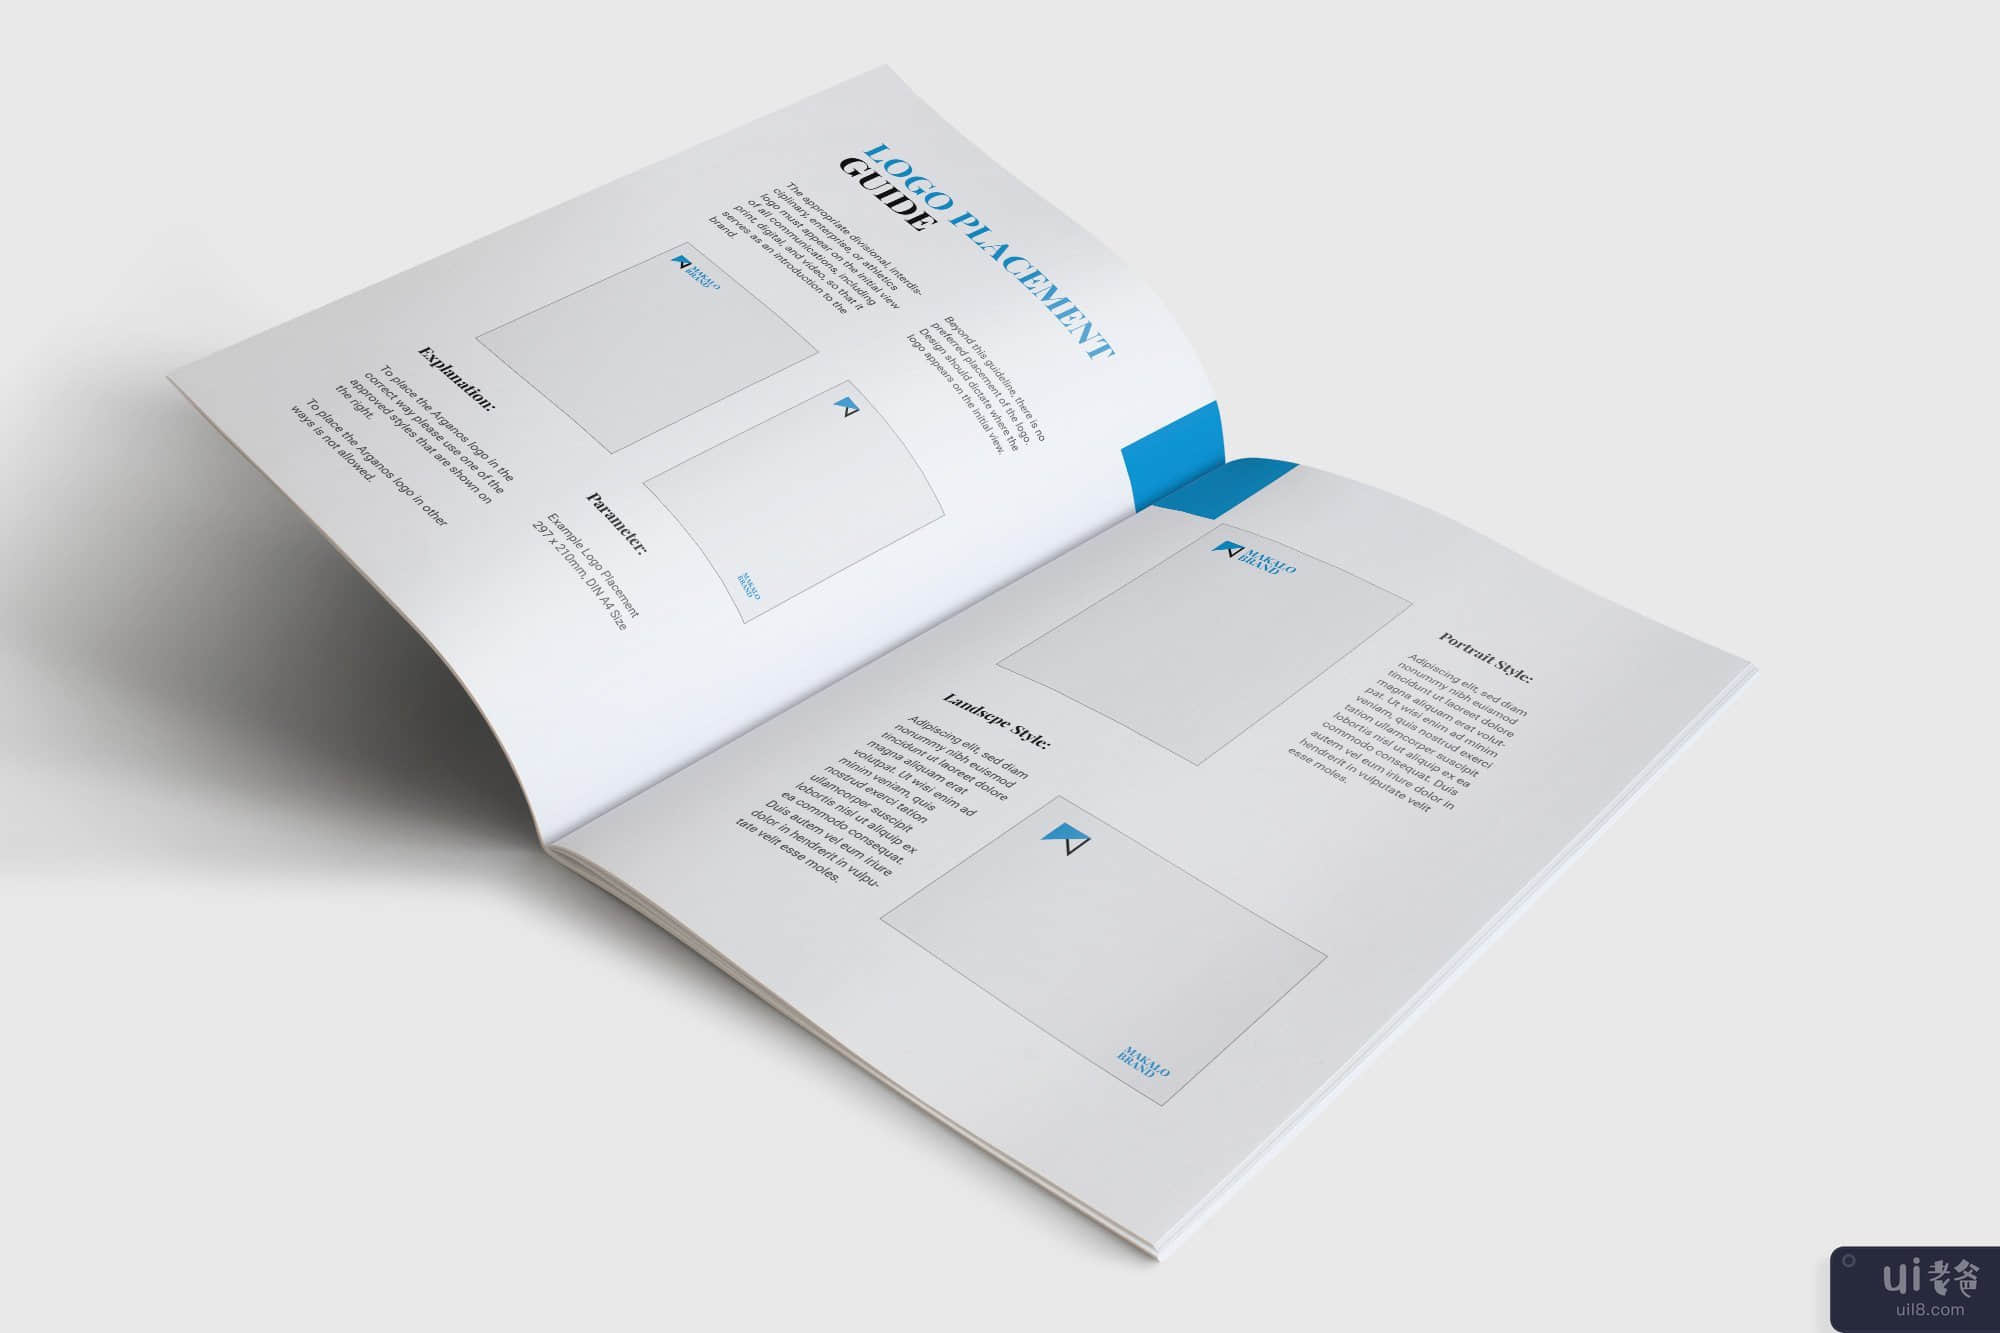 品牌指南模板宣传册(Brand Guideline Template Brochure)插图5